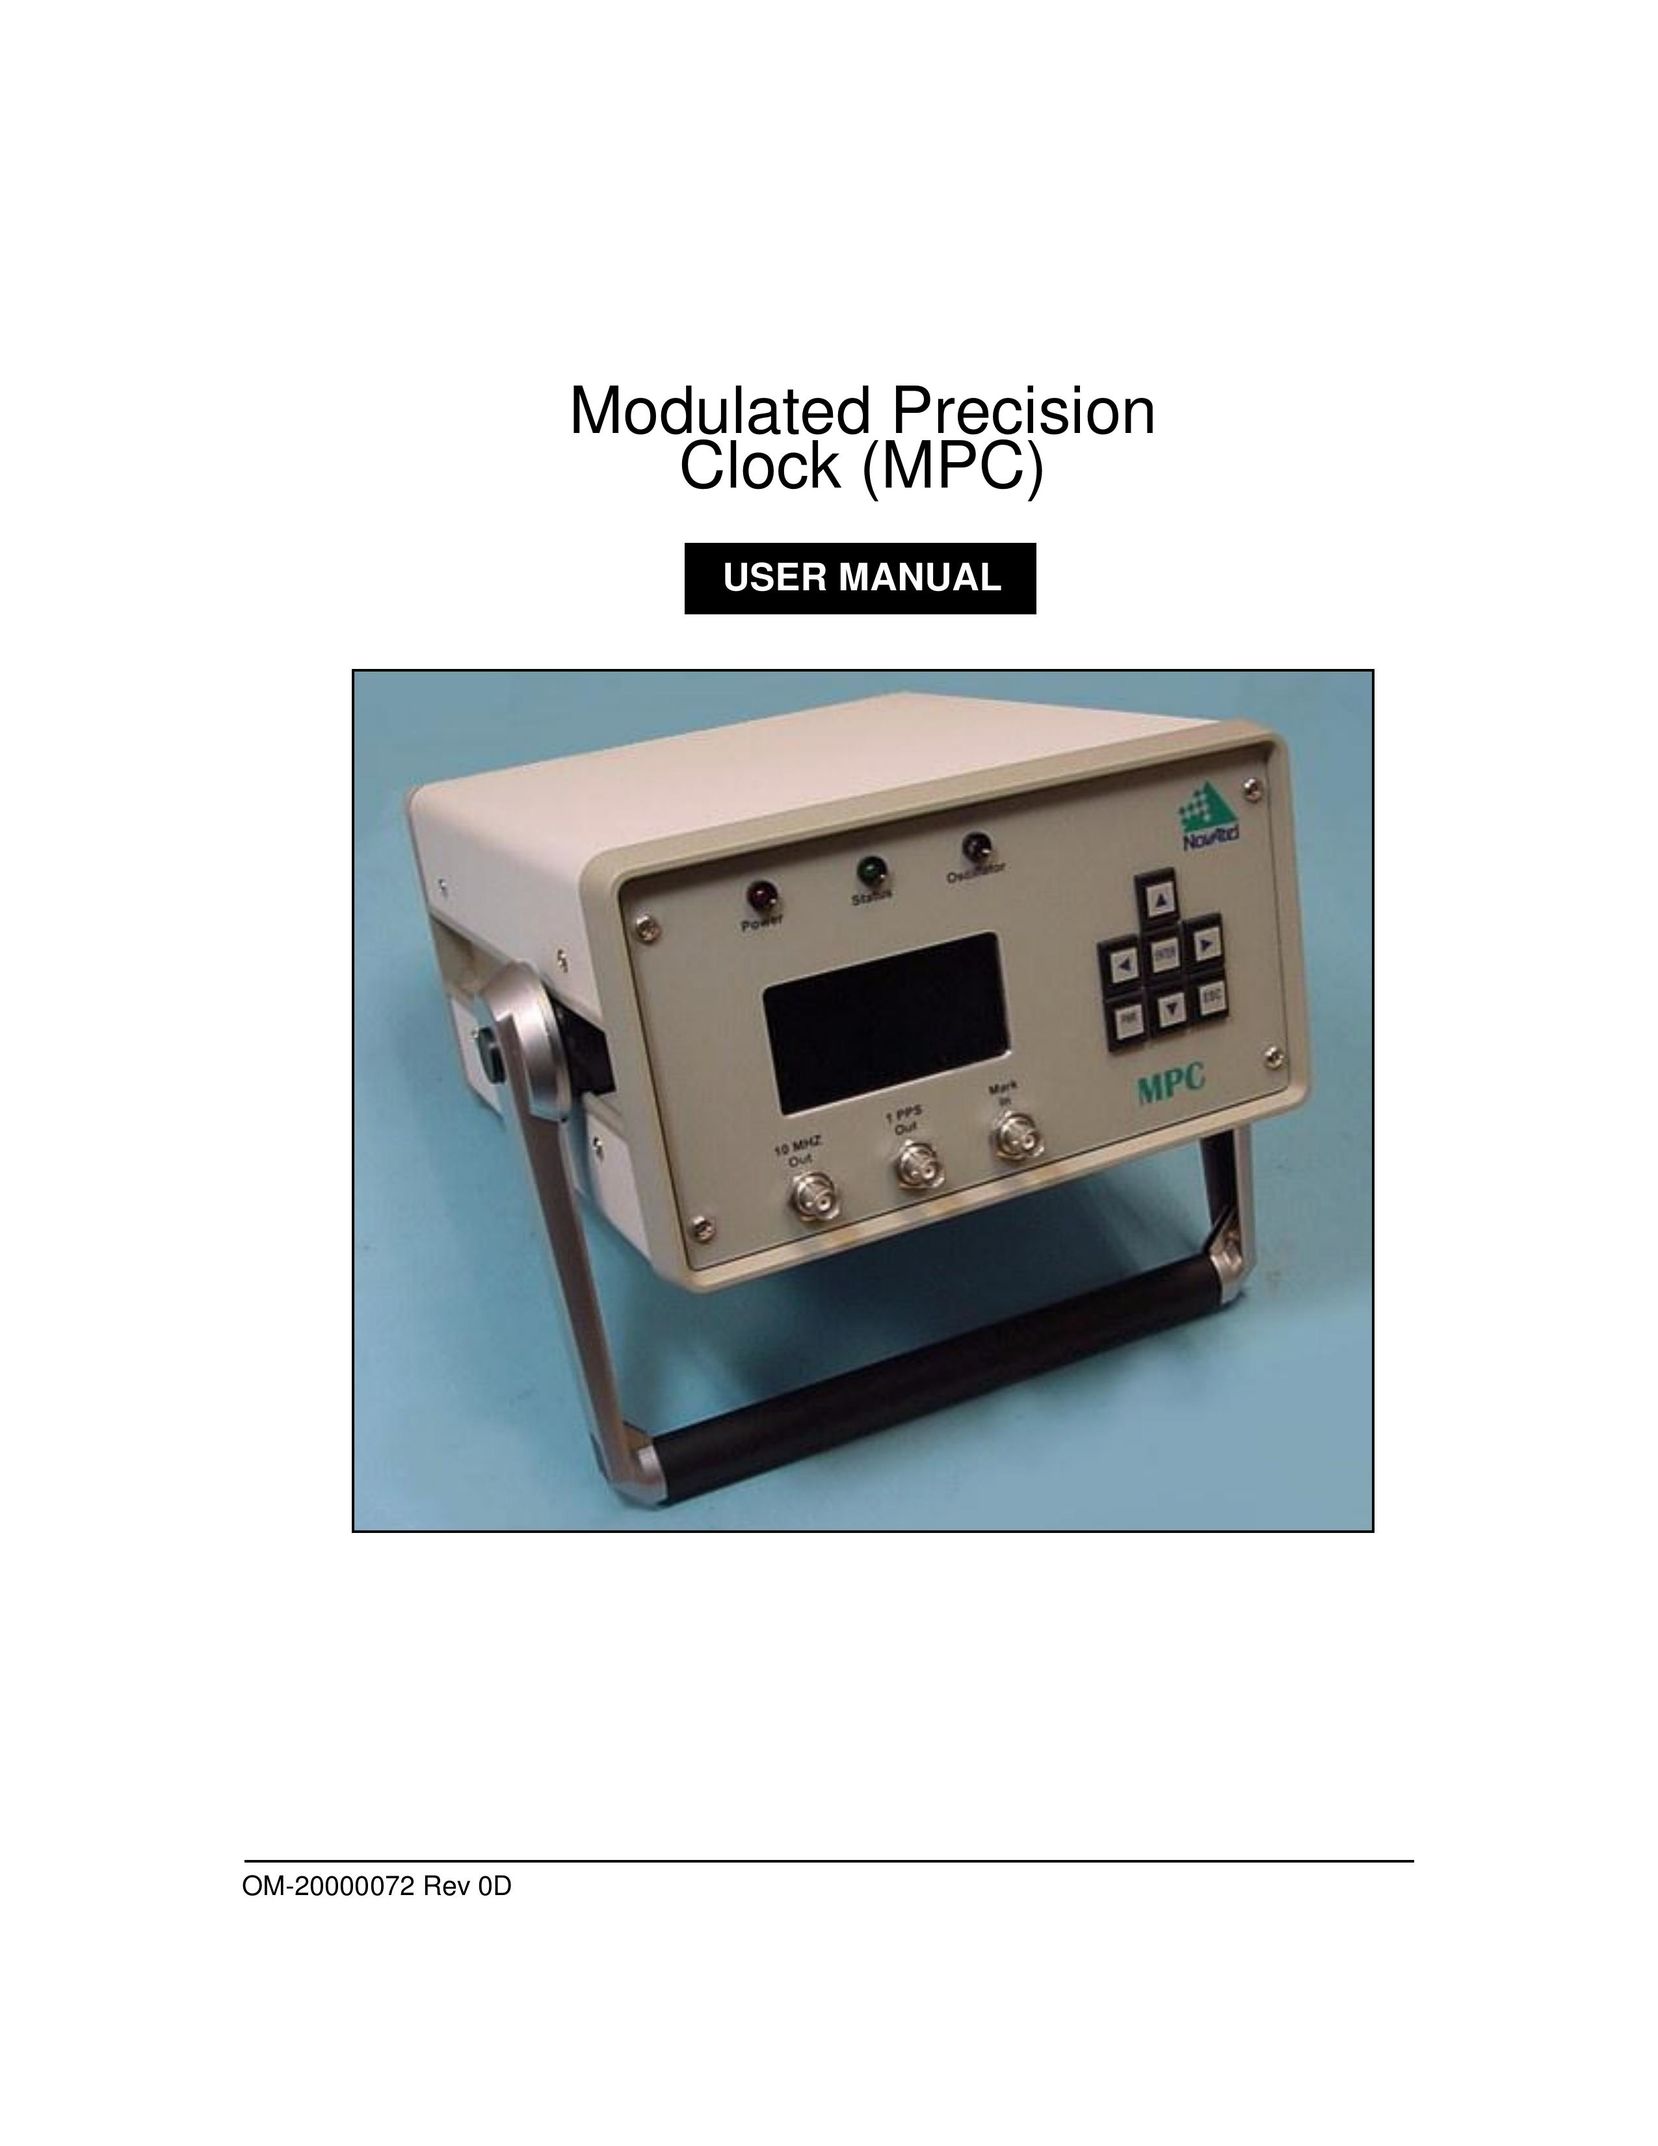 MPC OM-20000072 Clock User Manual